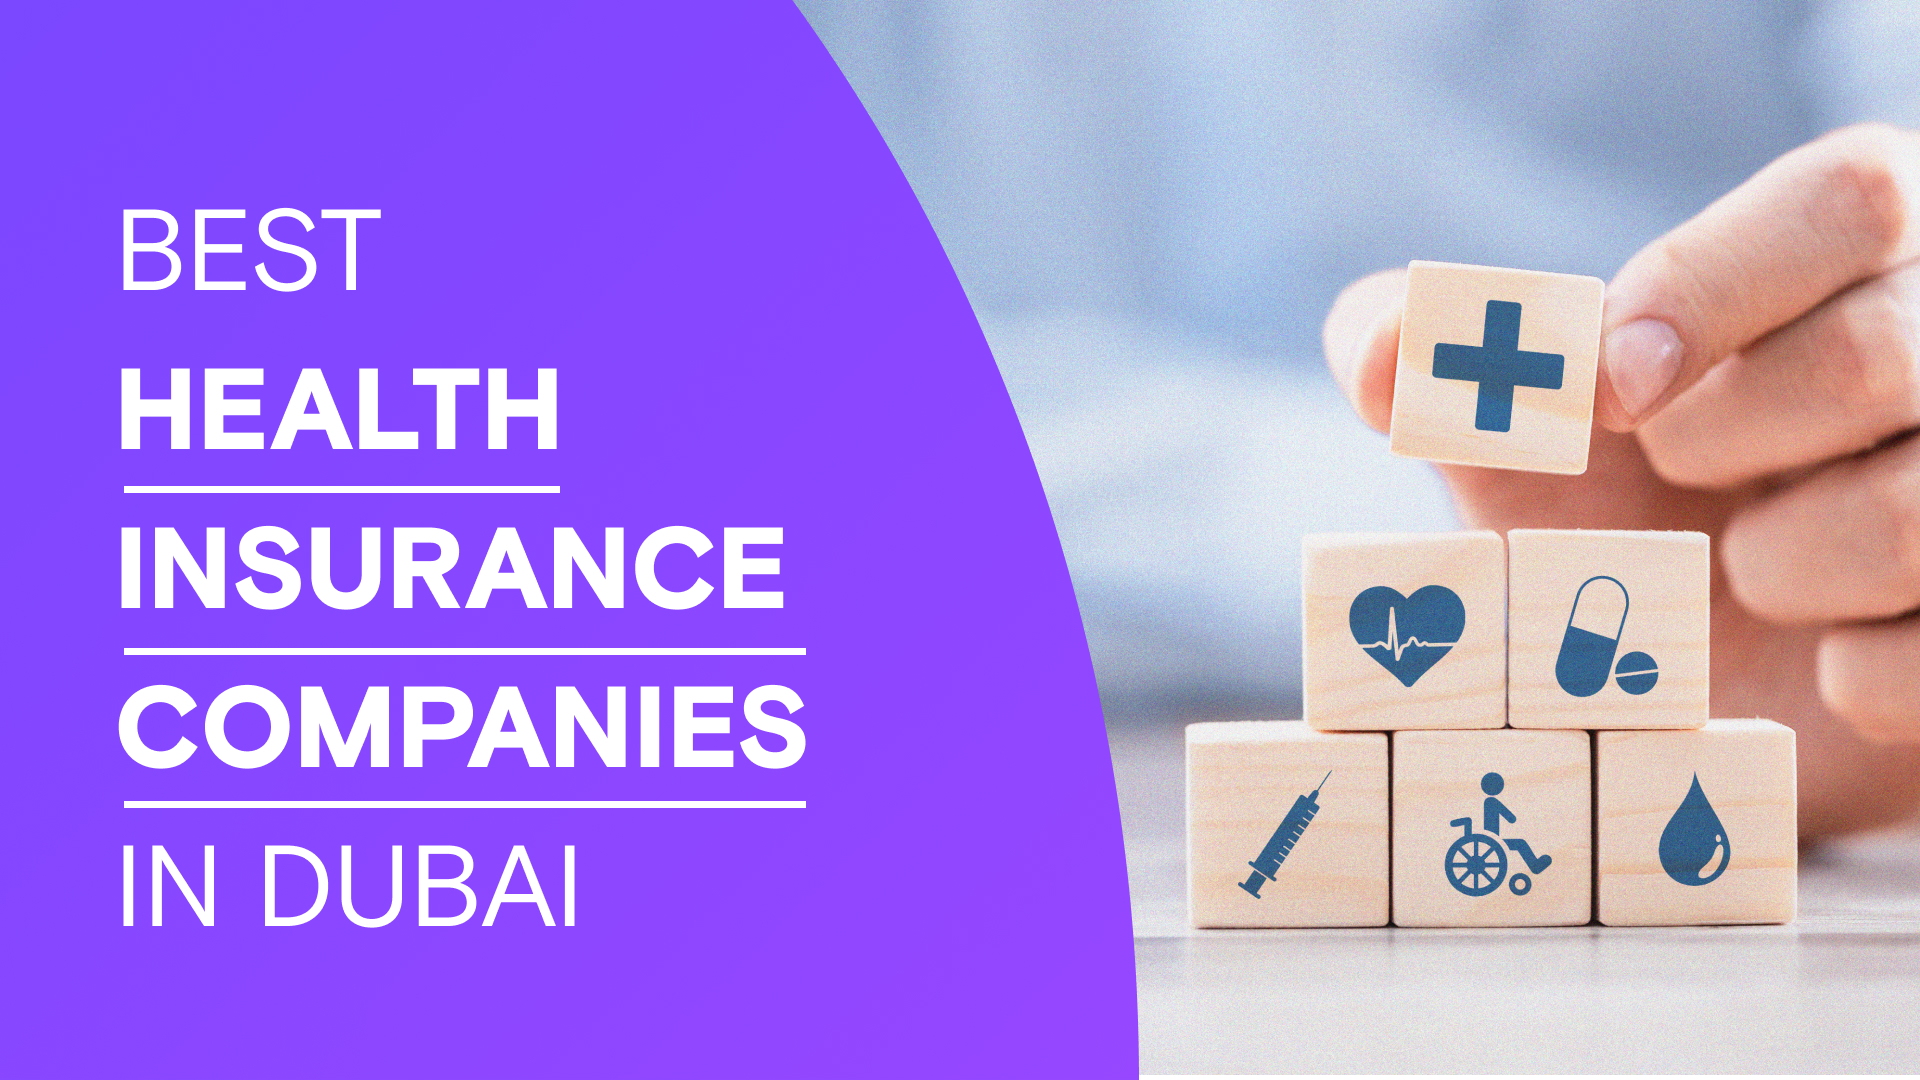 Dubai Health Insurance Companies